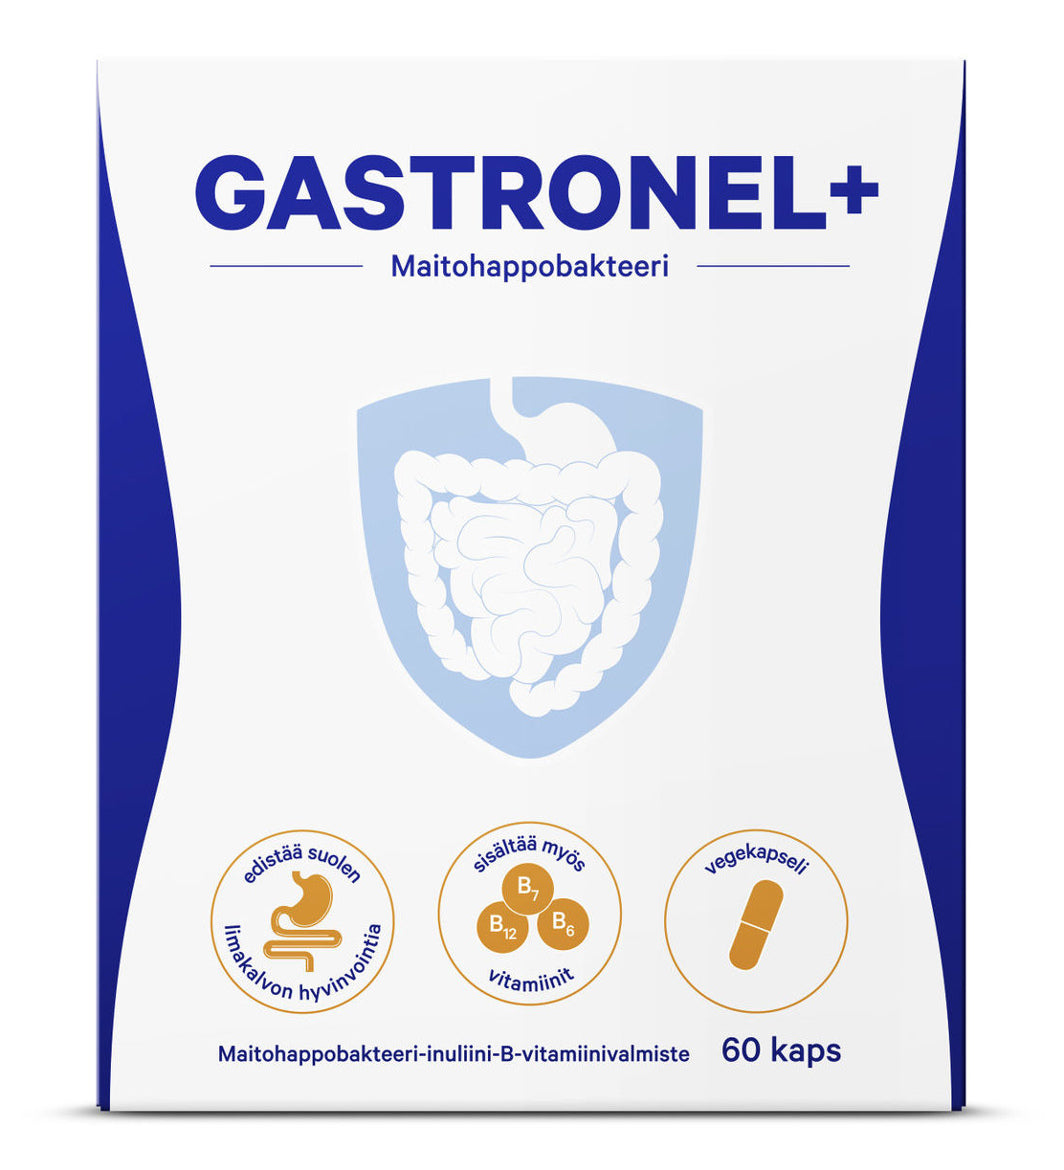 Gastronel+ Maitohappobakteeri-inuliini-B-vitamiinivalmiste 60 kaps.